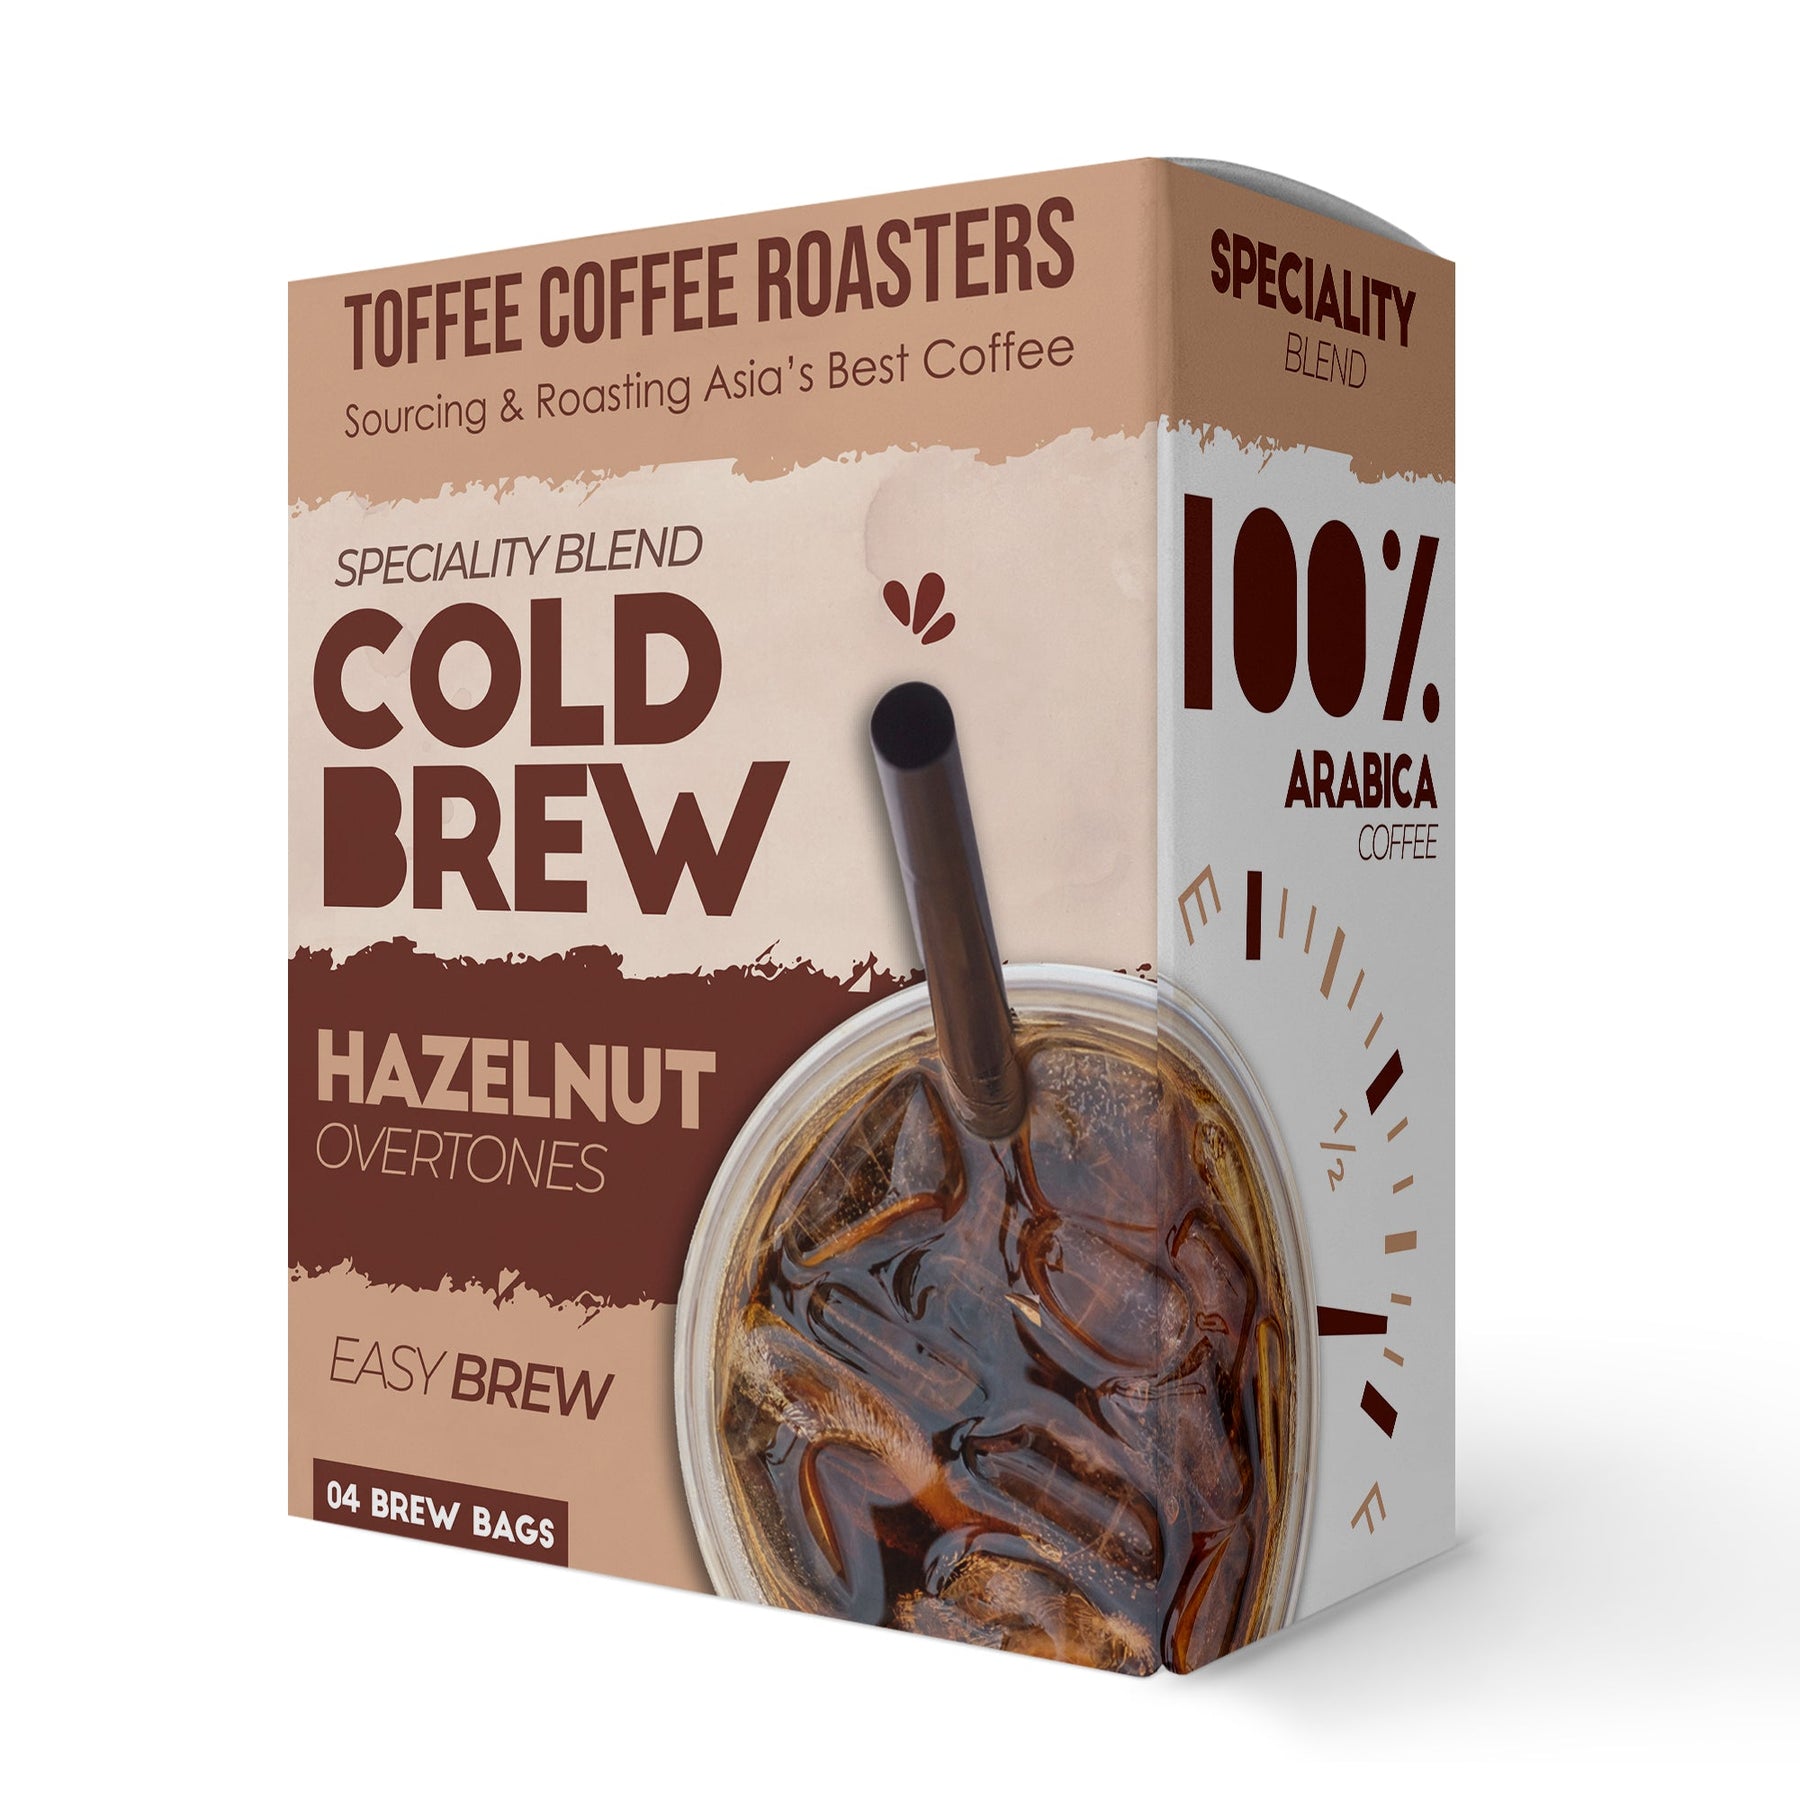 Quick Guide to the Latest Coffee Craze - Mason Jar Merchant